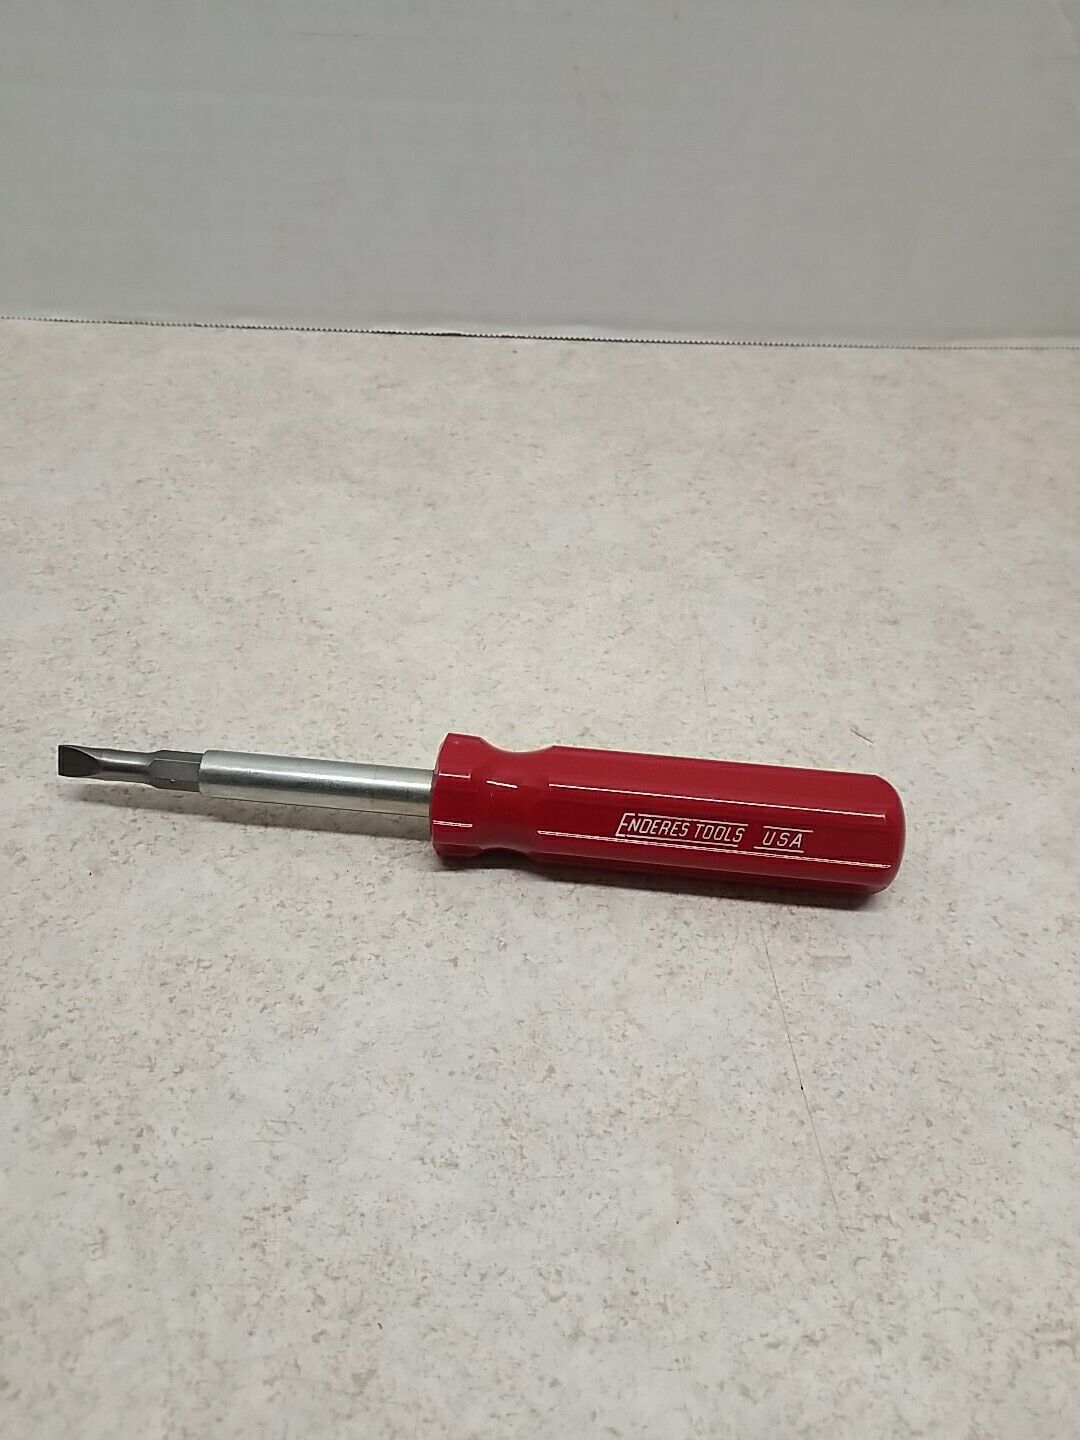 Enderes Tool 8in Screwdriver 4 in 1 USA Red Handle Vintage Very Clean